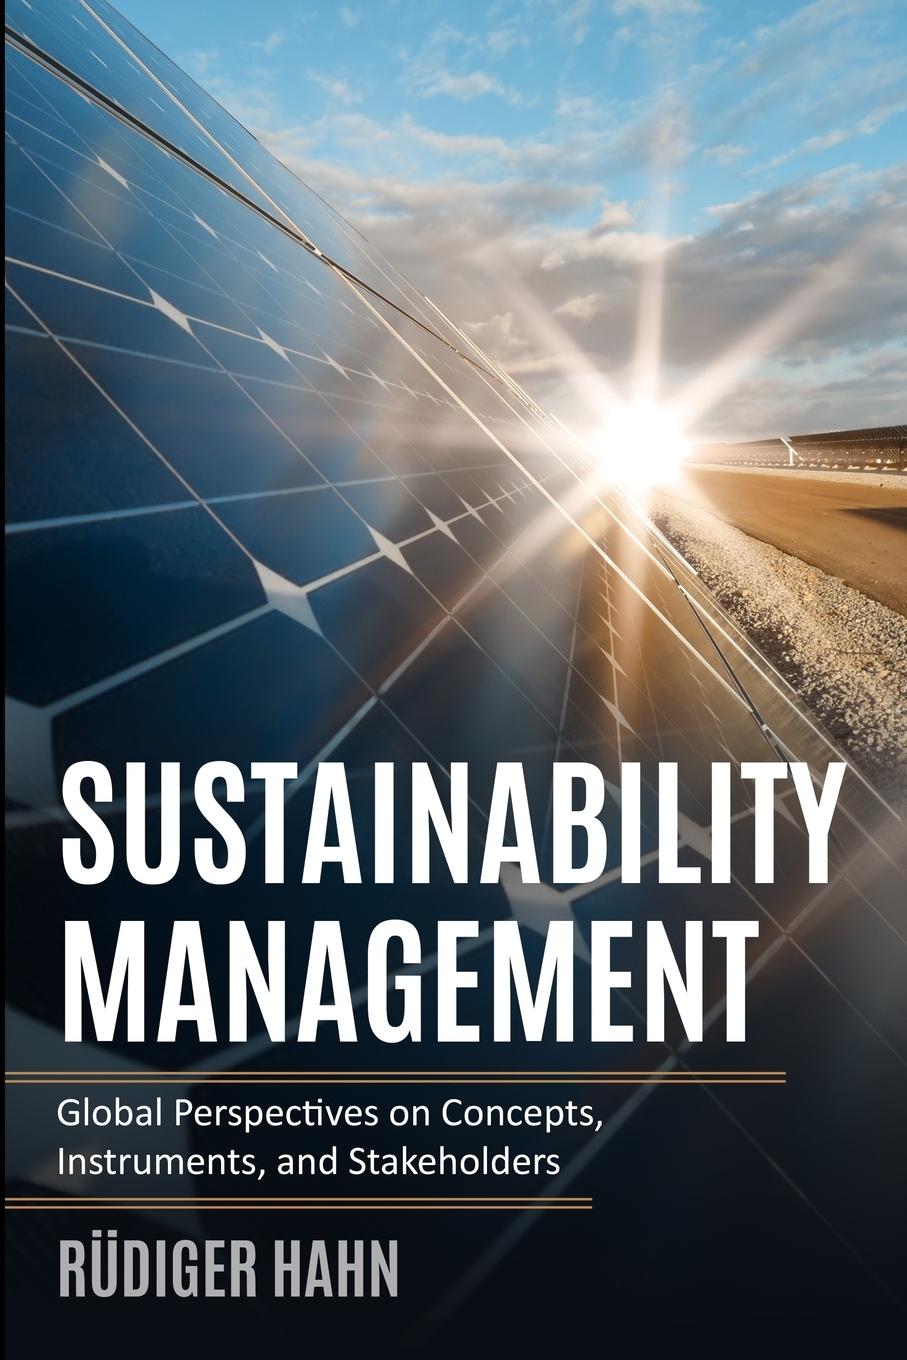 Book Sustainability Management R DIGER HAHN